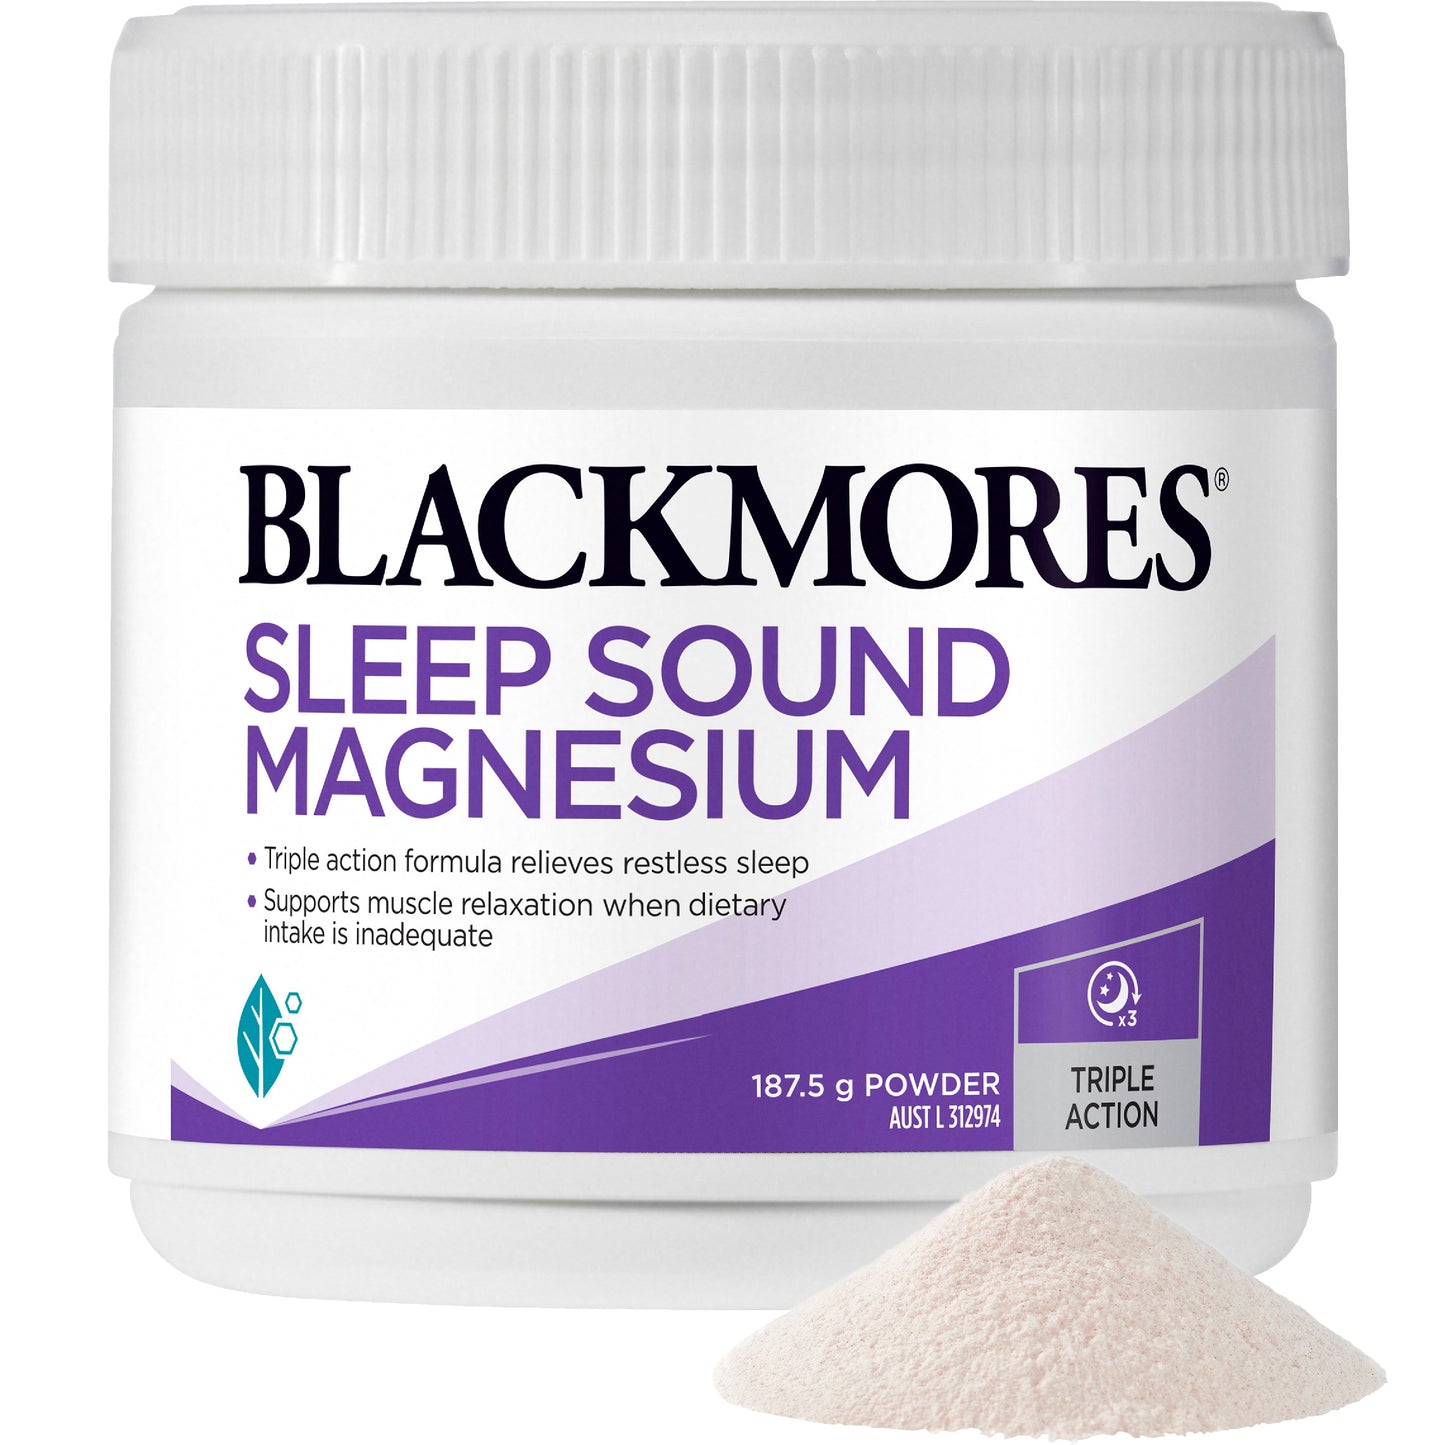 Blackmores Sleep Sound Magnesium